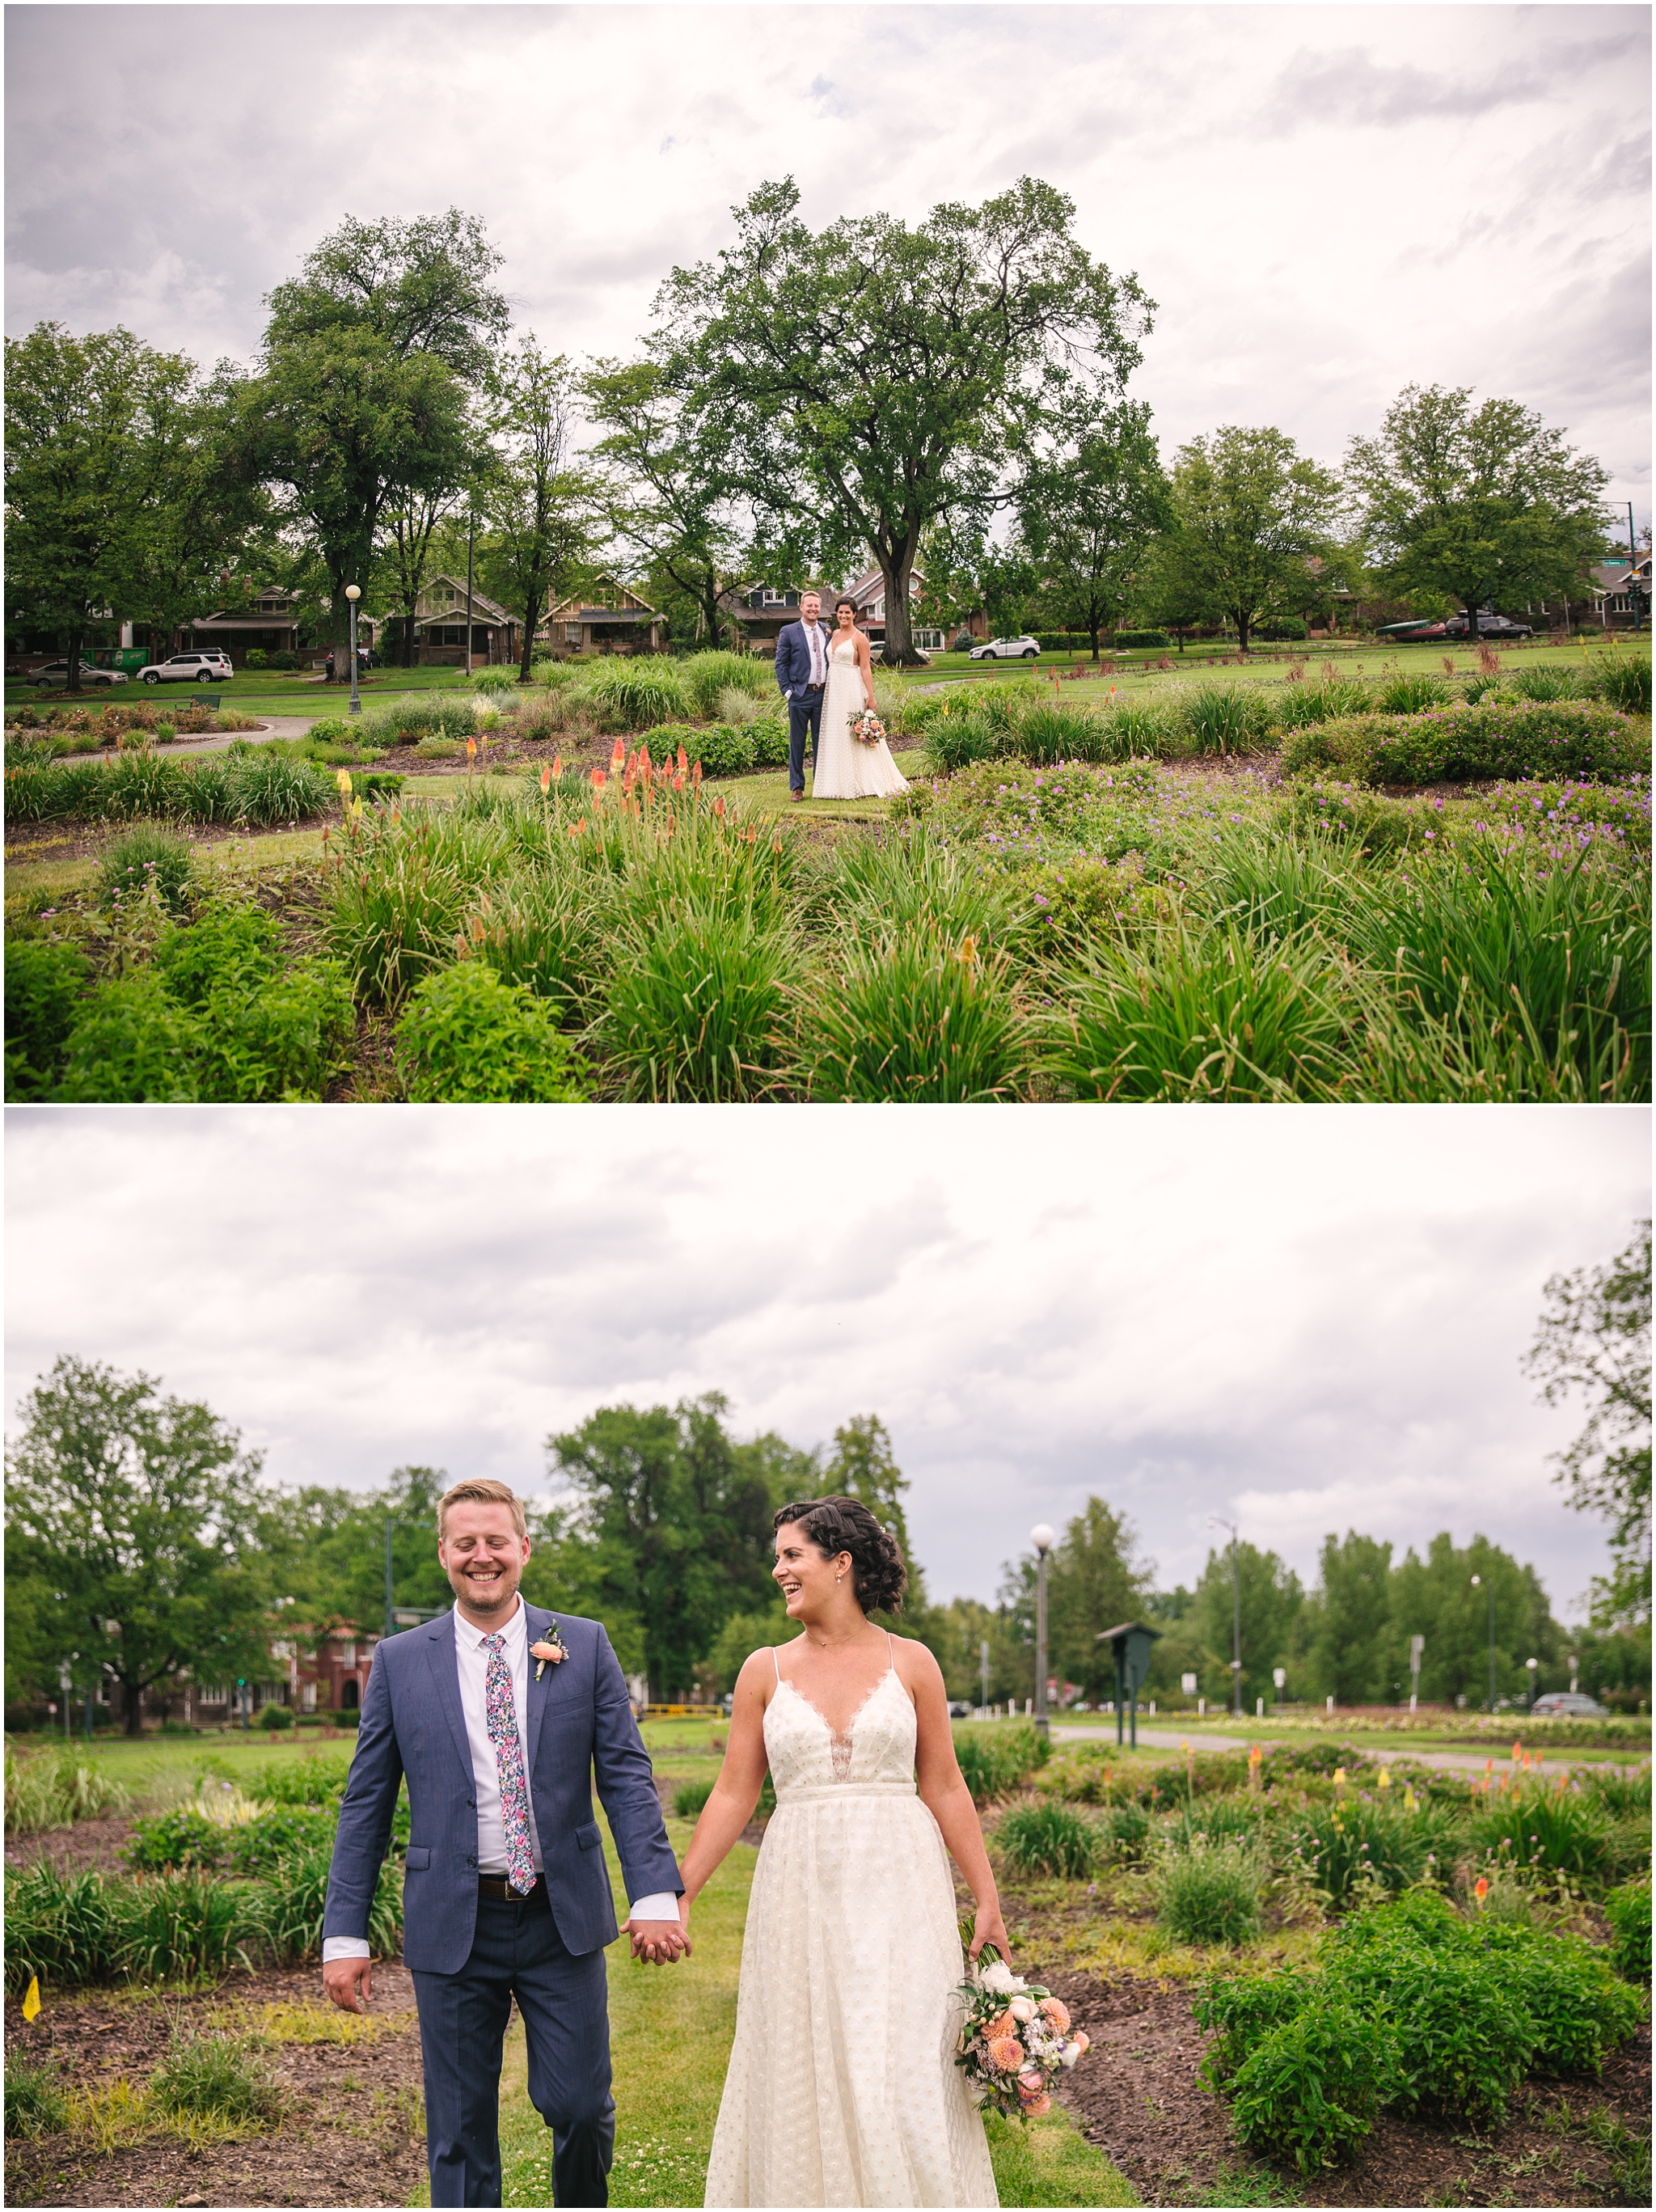 Bride and groom portraits at Denver's Washington Park garden